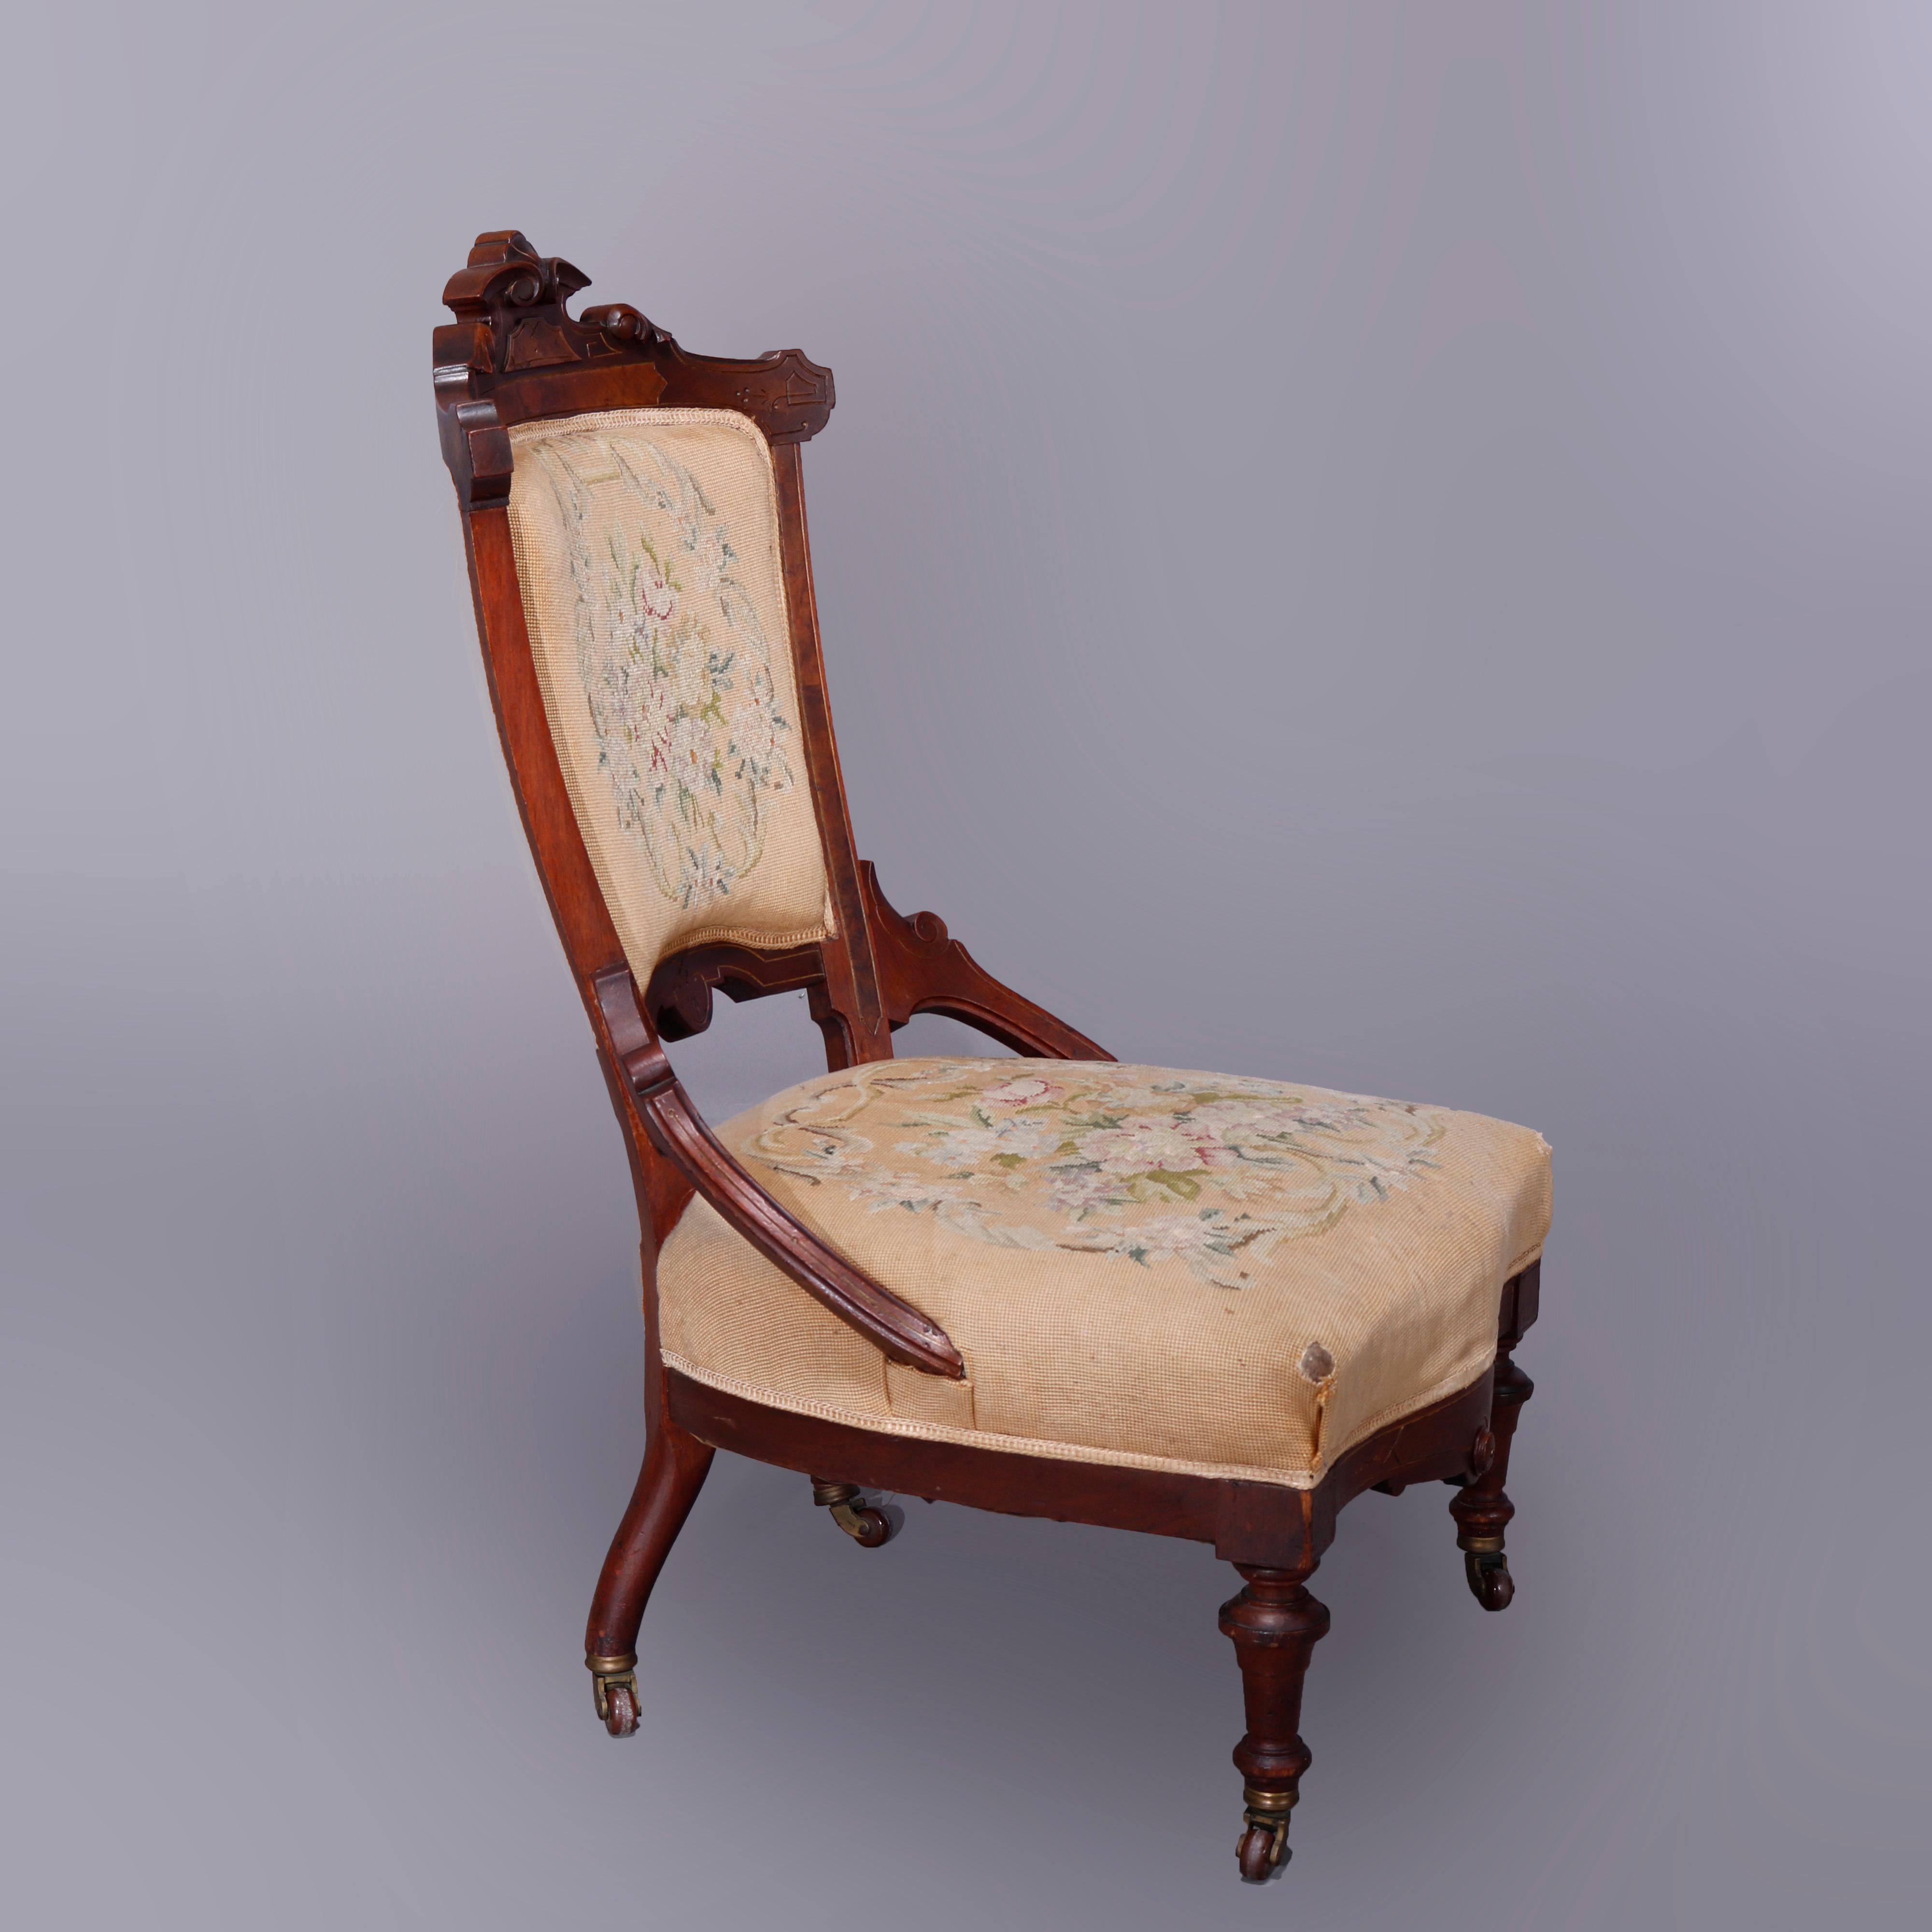 Upholstery Antique Renaissance Revival Walnut, Burl & Needlepoint Parlor Chairs, c1890 For Sale